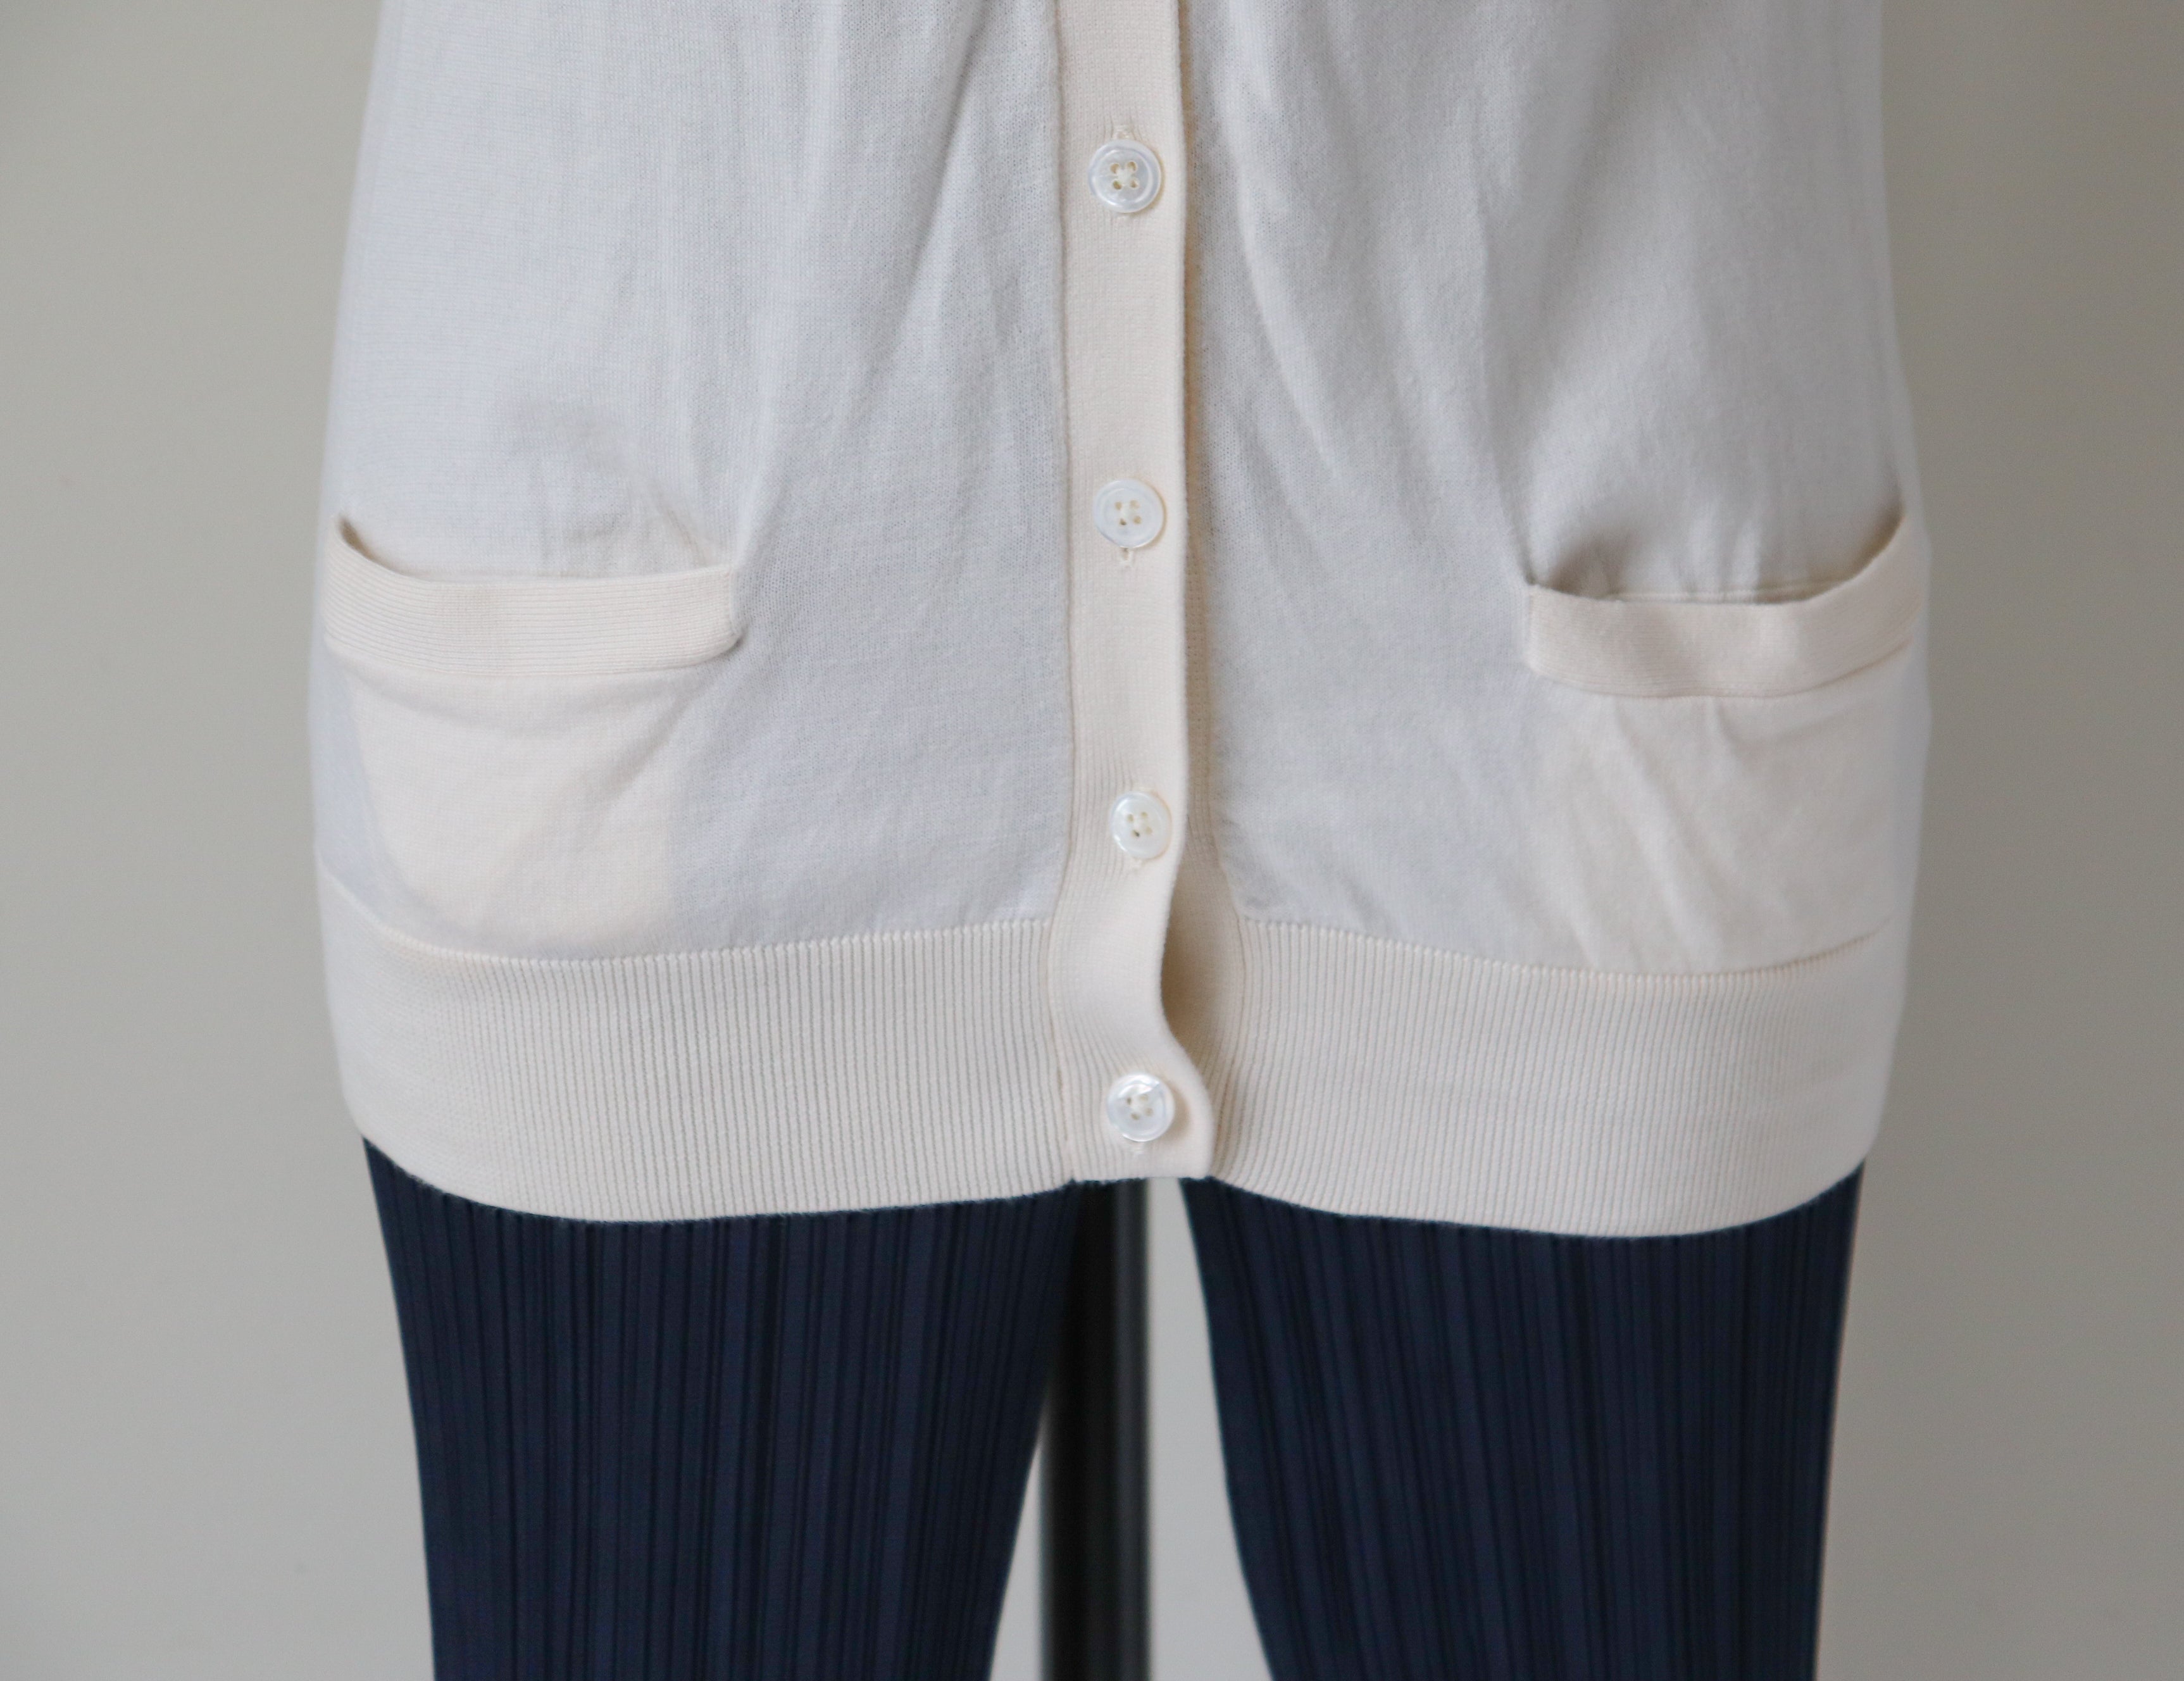 Short Sleeve Cardigan - Ralph Lauren - Cream- Skinny - S / UK 10